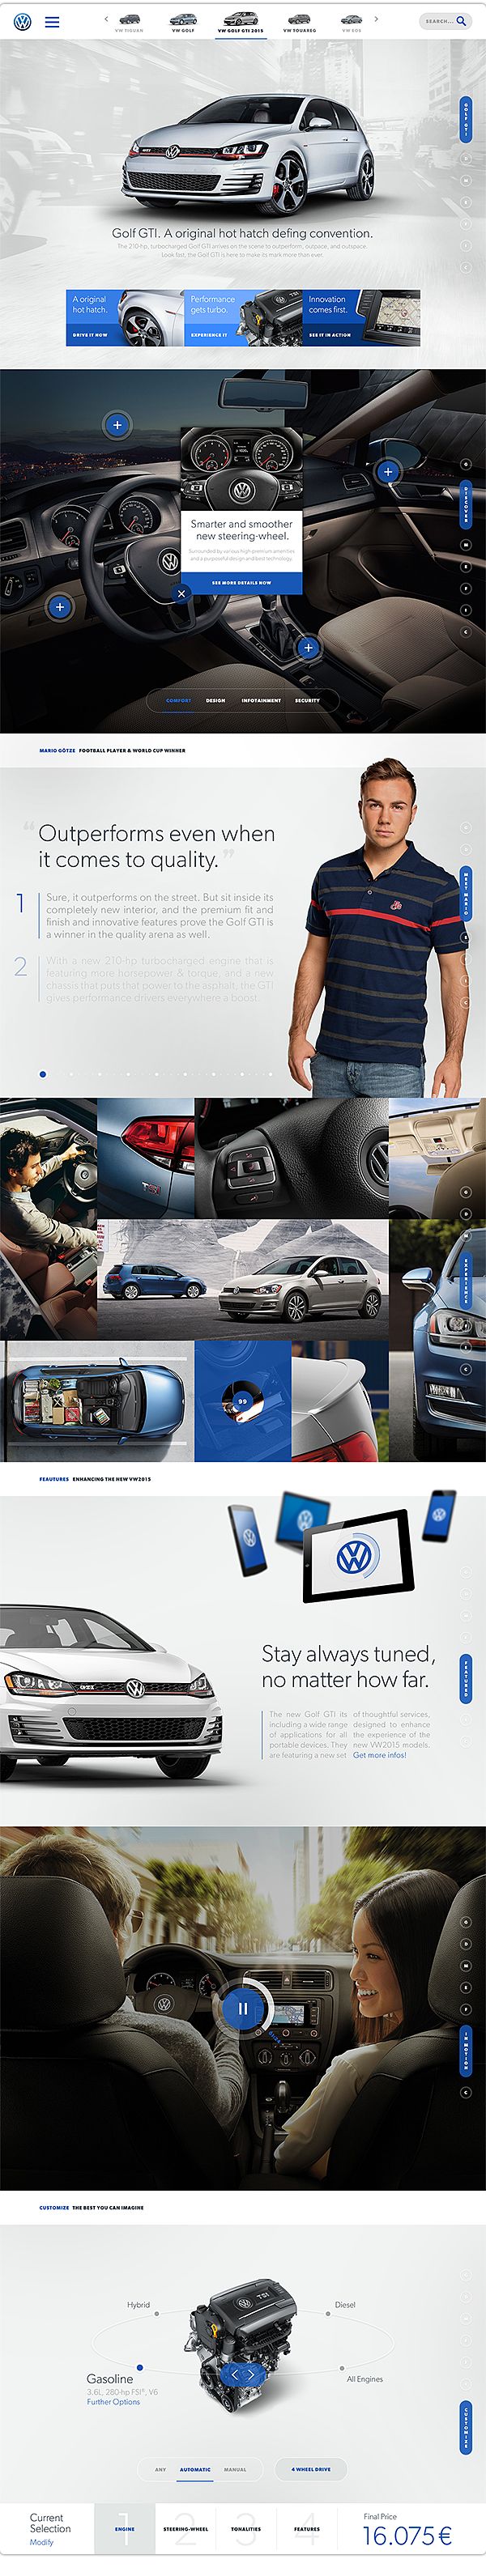 The future of Volkswagen by Oriol Bedia is 2otsu